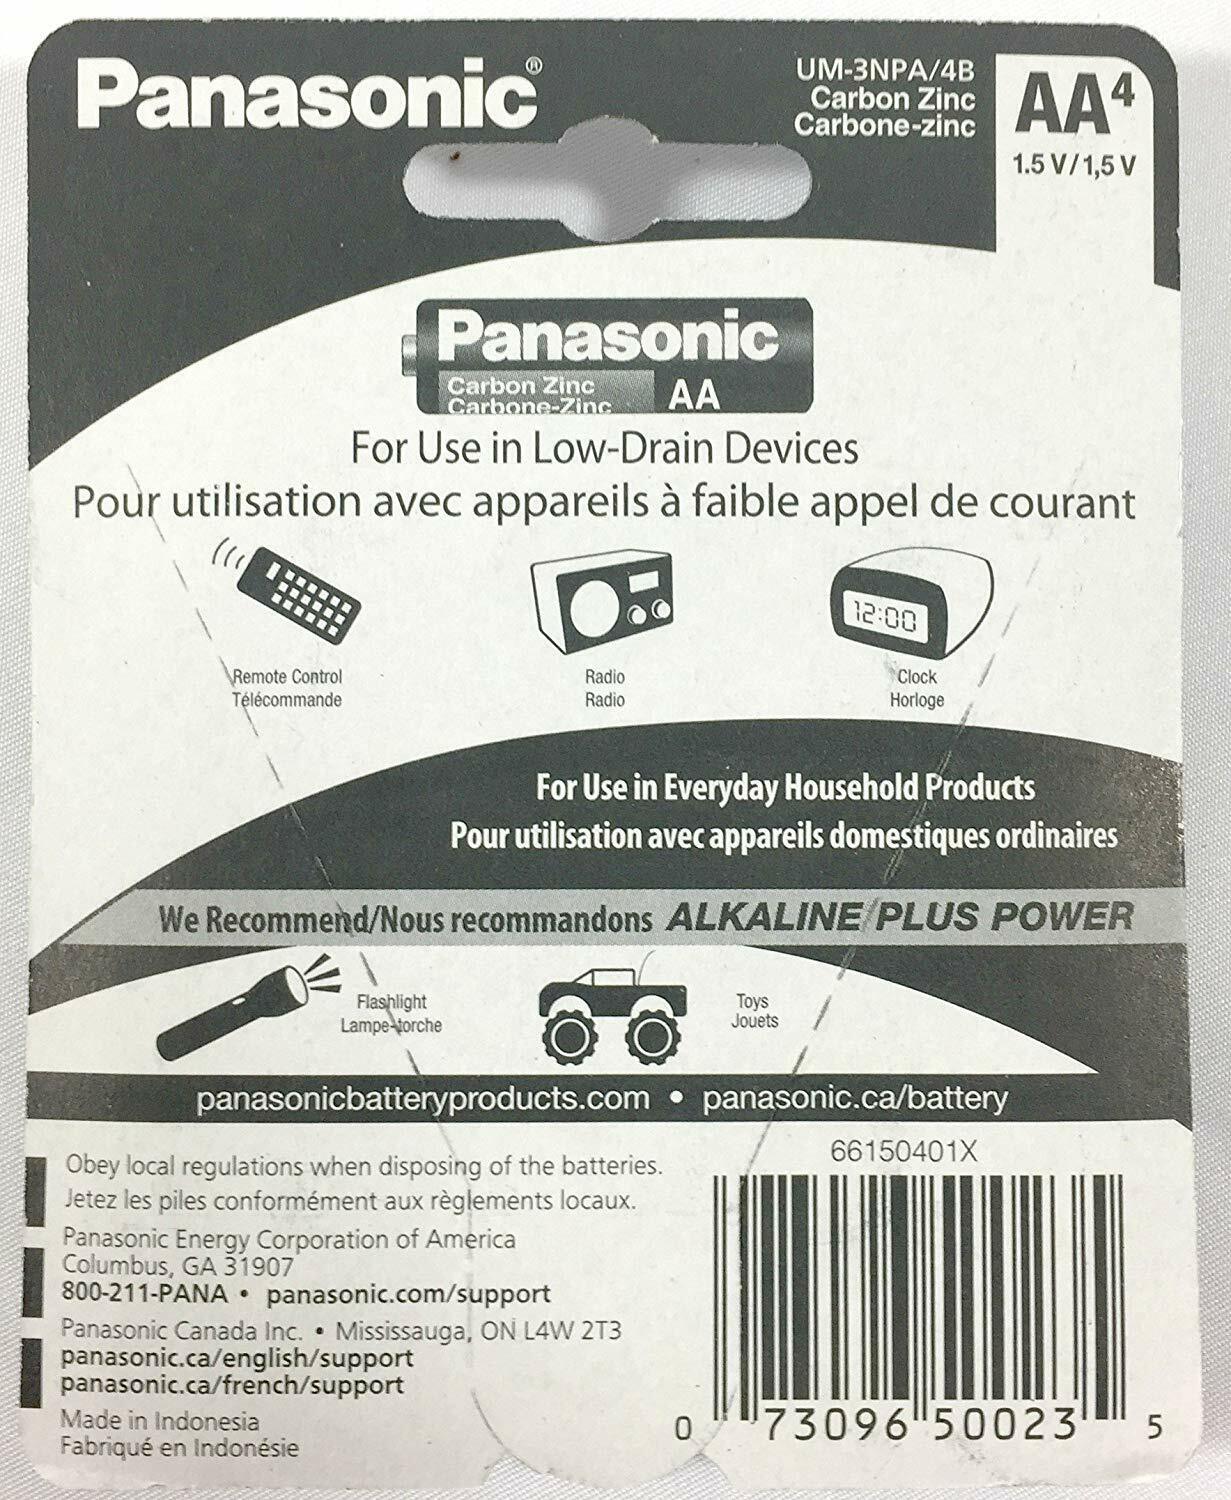 8x Panasonic AA 1.5V Batteries Heavy Duty Power Carbon Zinc Double A Battery Panasonic UM-3NPA/4B - фотография #4